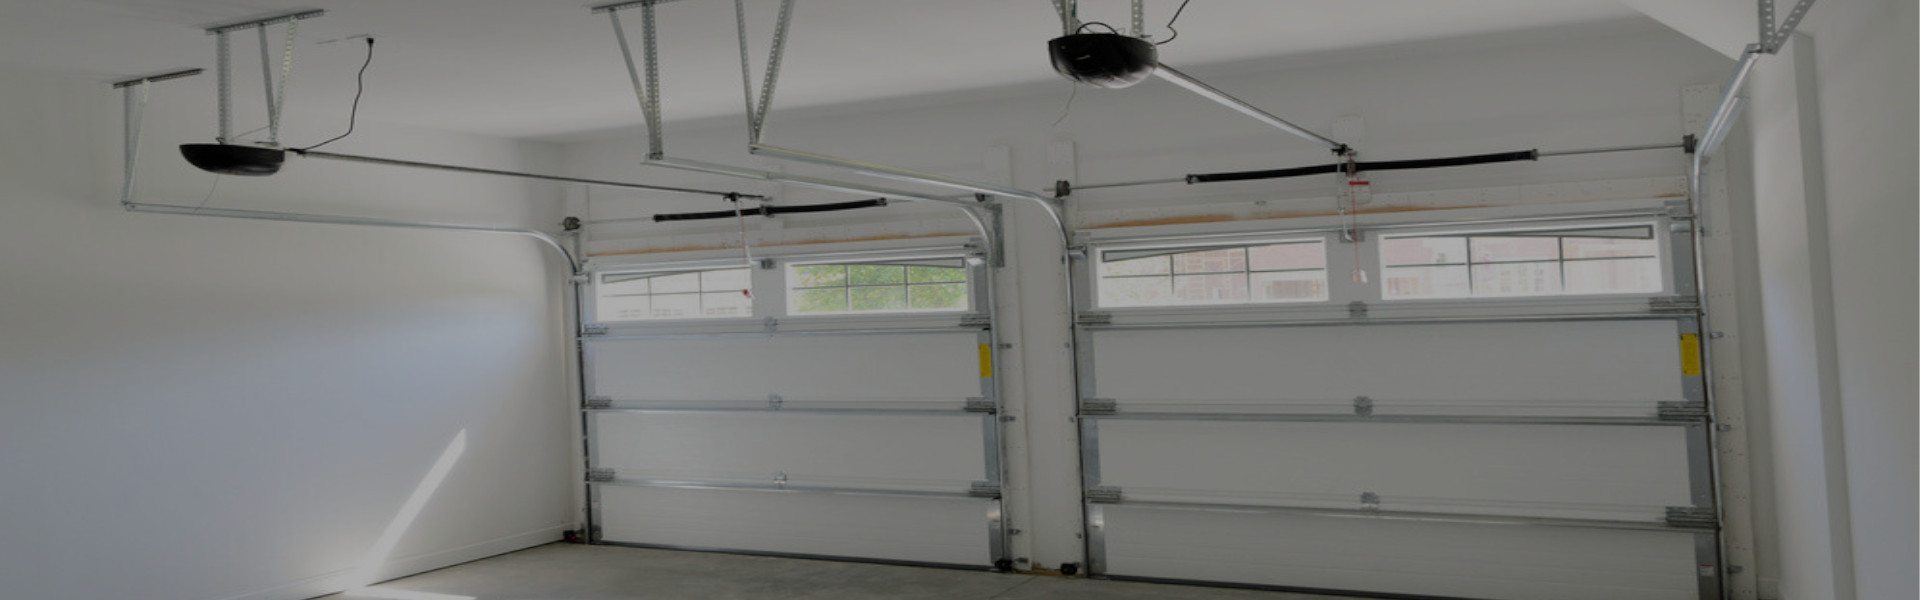 Slider Garage Door Repair, Glaziers in Dalston, E8